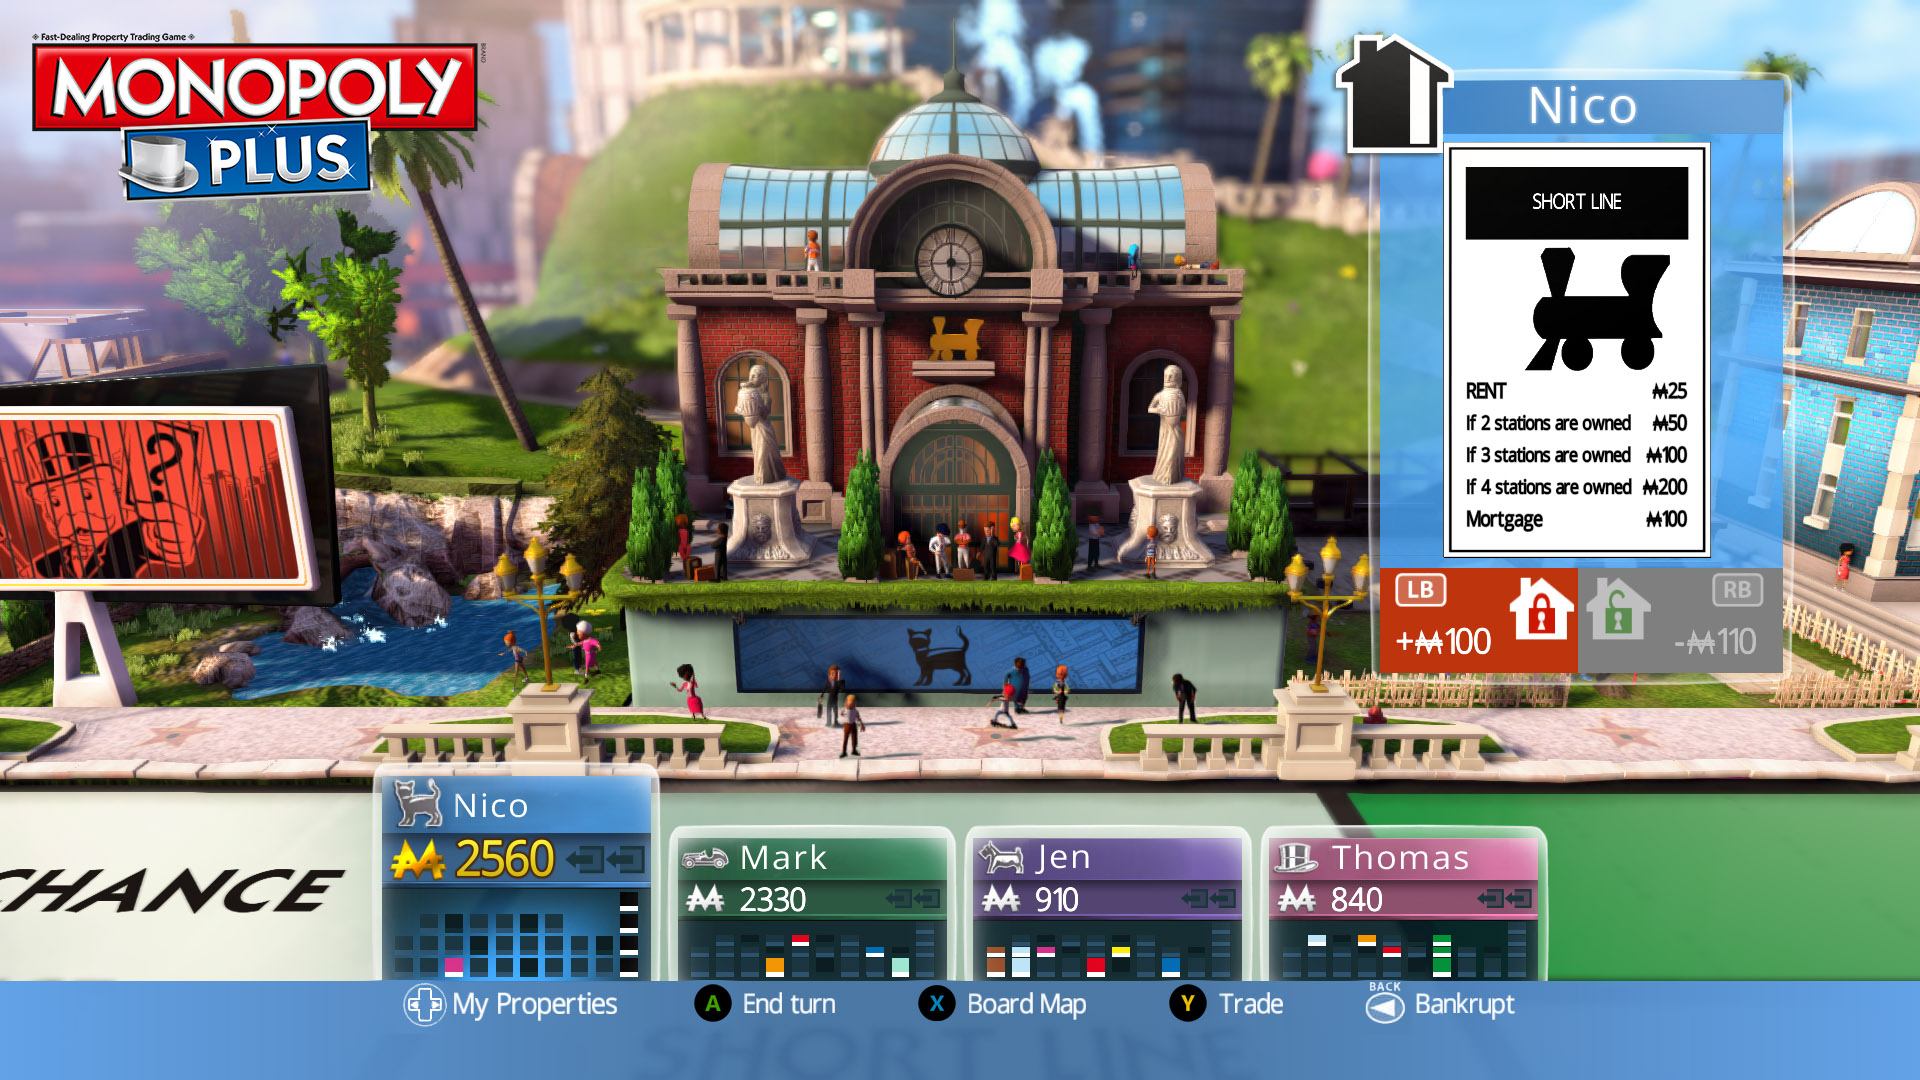 Скриншот *Monopoly Plus [PS4] 5.05 / 6.72 / 7.02 [EUR] (2014) [Русский] (v1.01)*